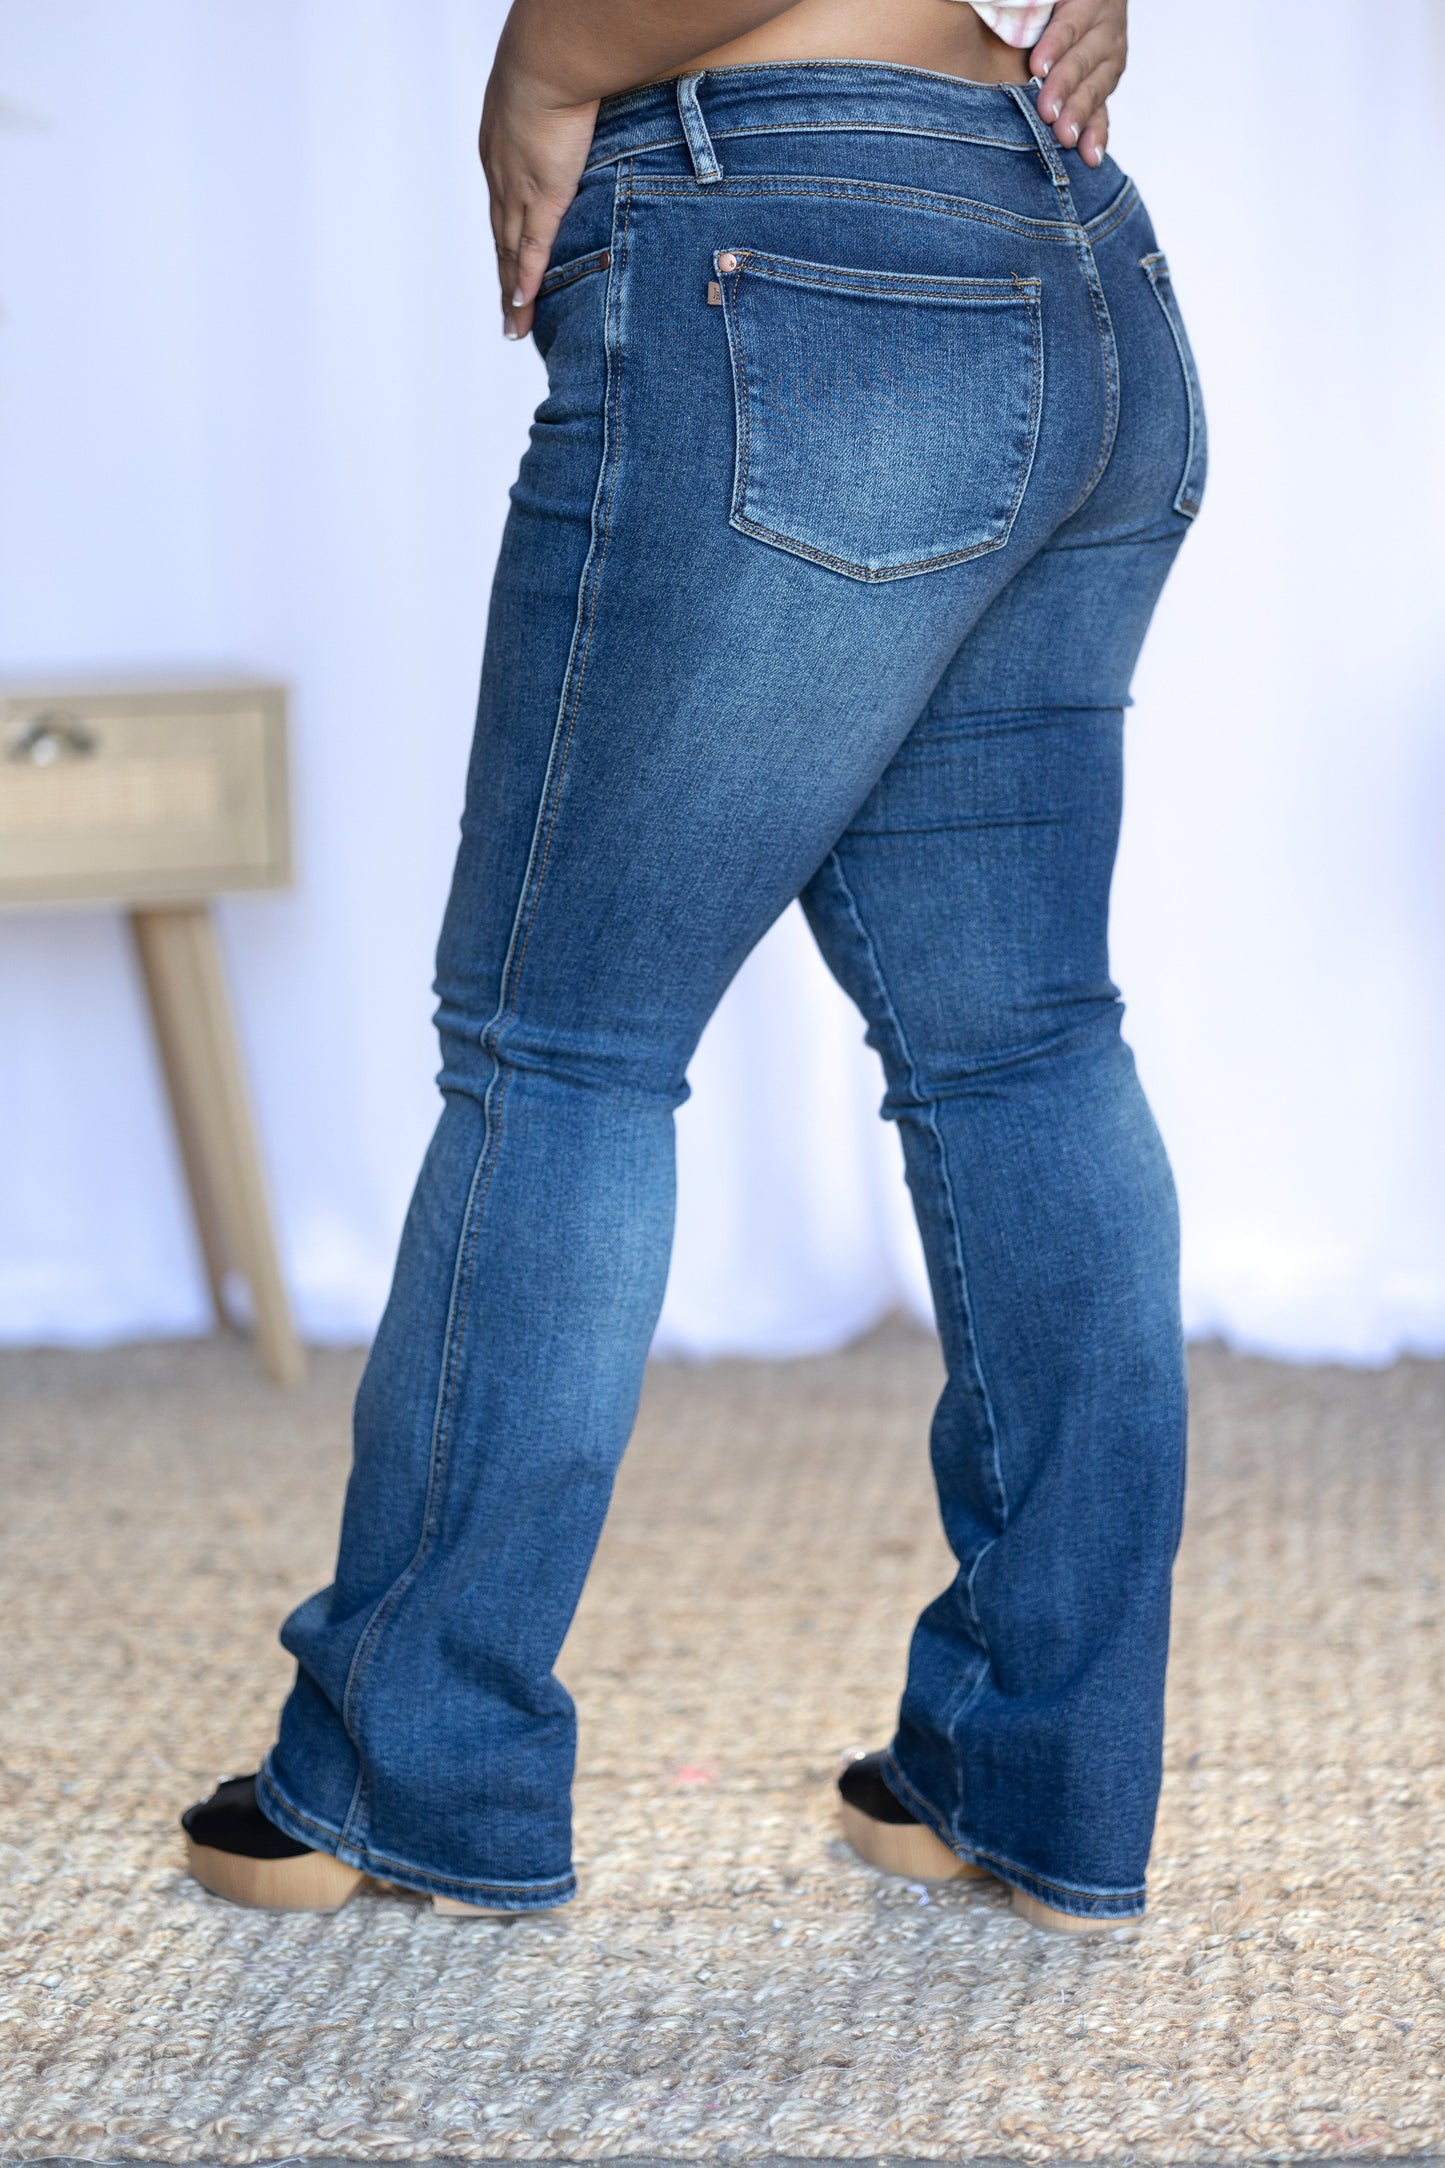 Lucille Judy Blue Bootcut Jeans